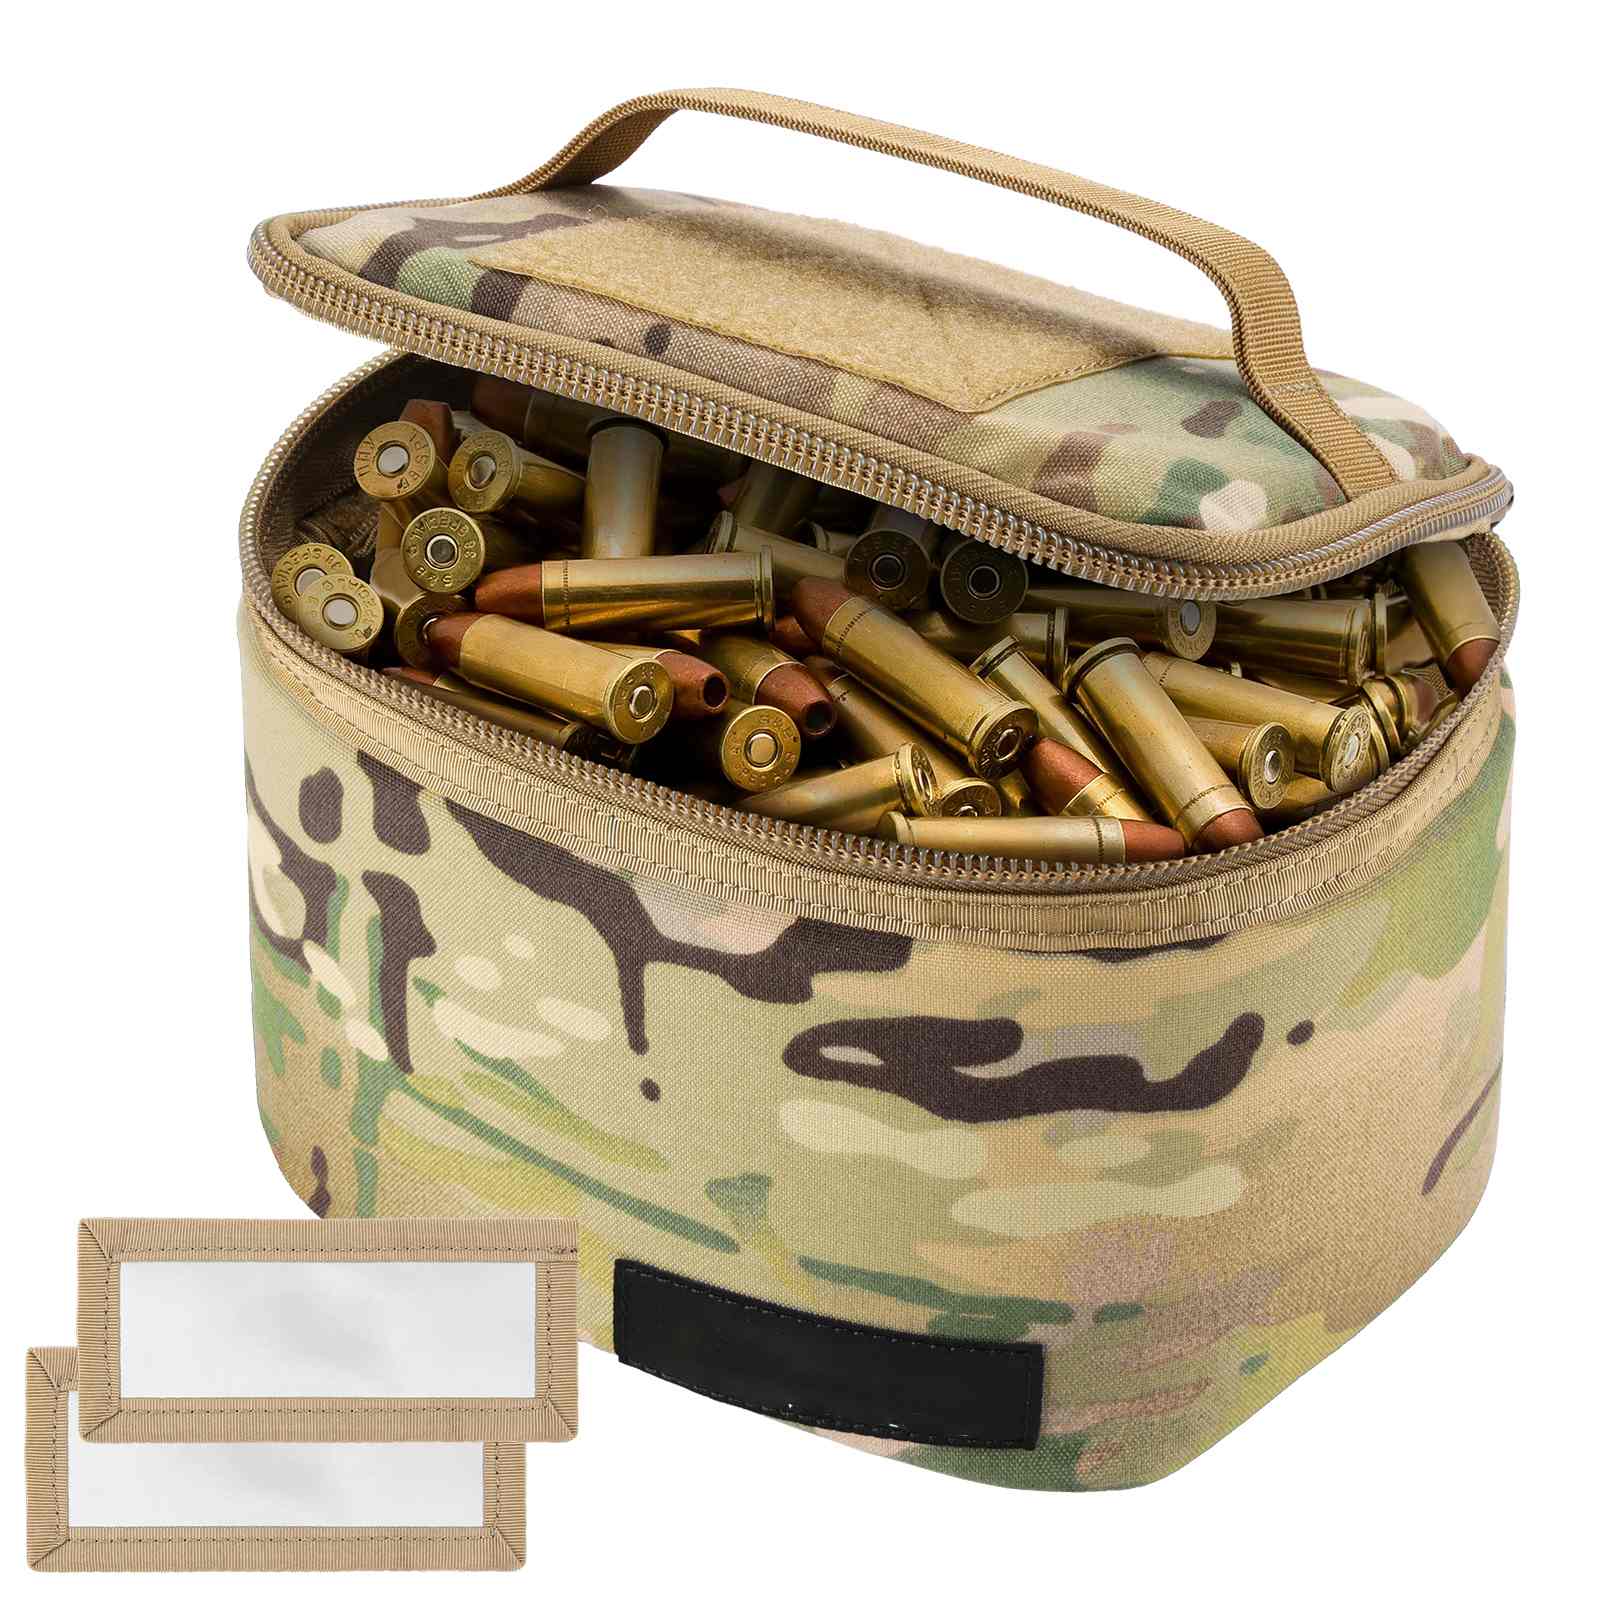 Tactical Ammo Bag, Ammos Transportation Bag for Pistol Rifle and Shotgun Range